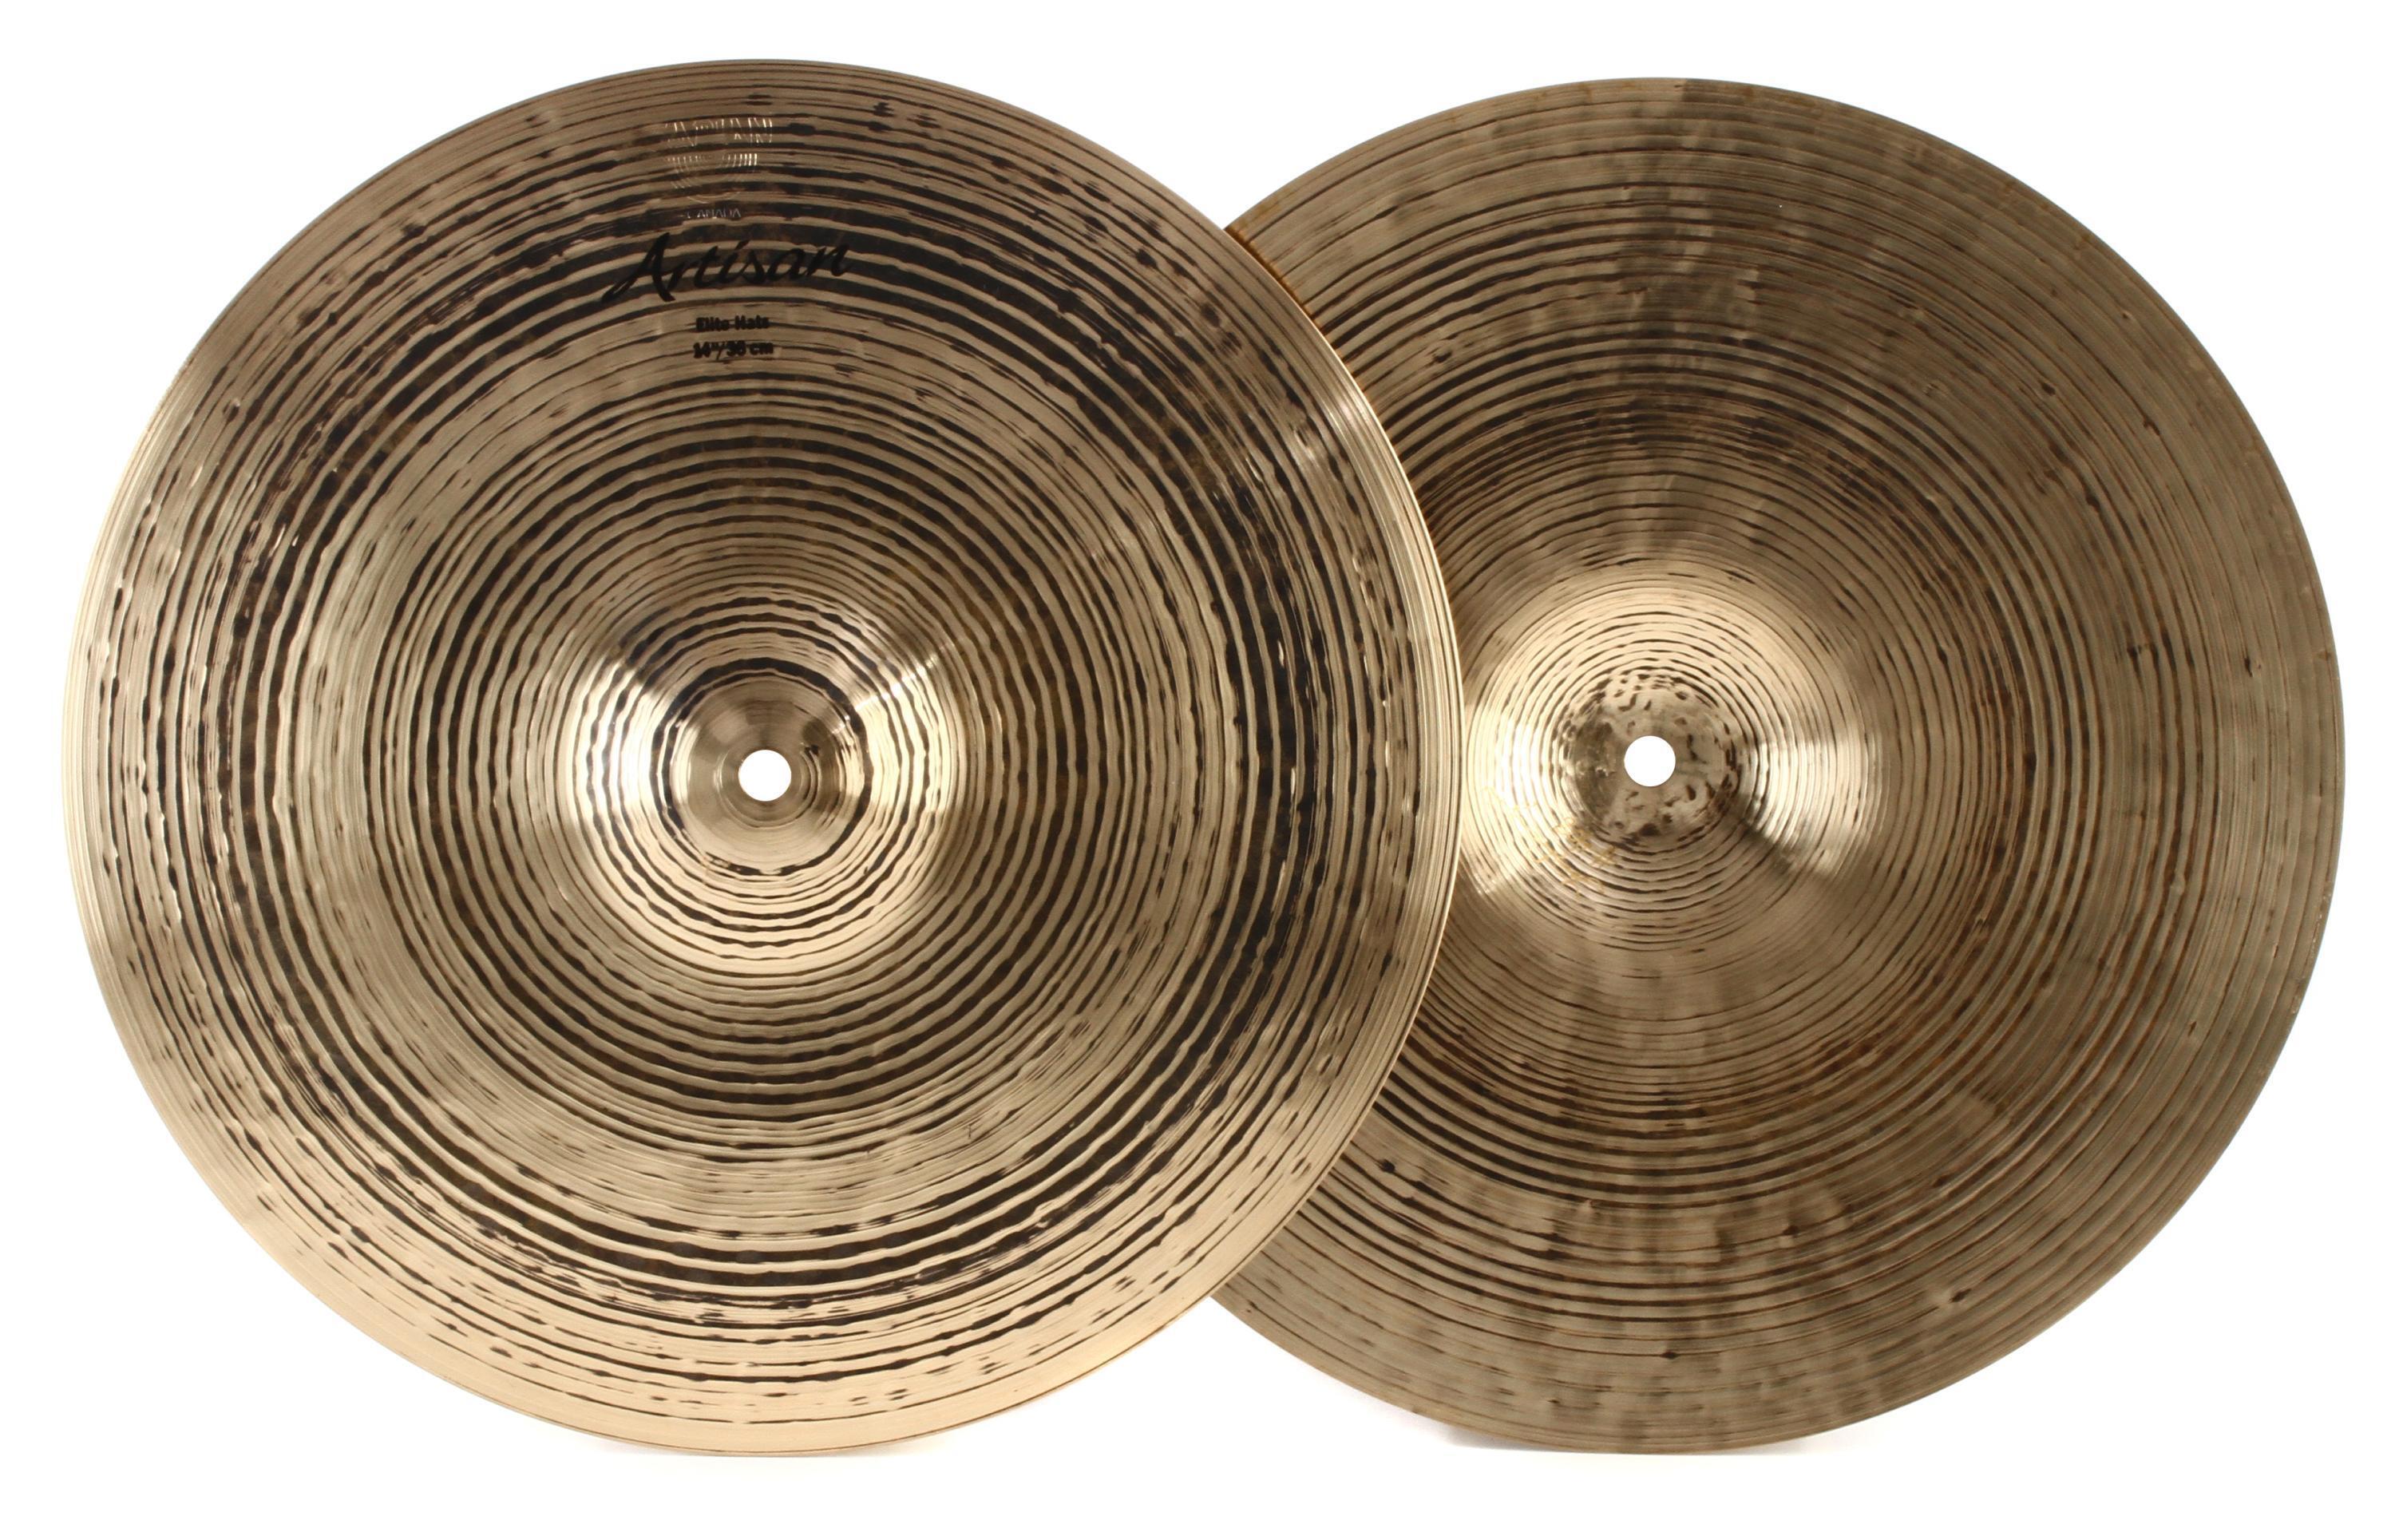 Sabian 14 inch Artisan Elite Hi-hat Cymbals